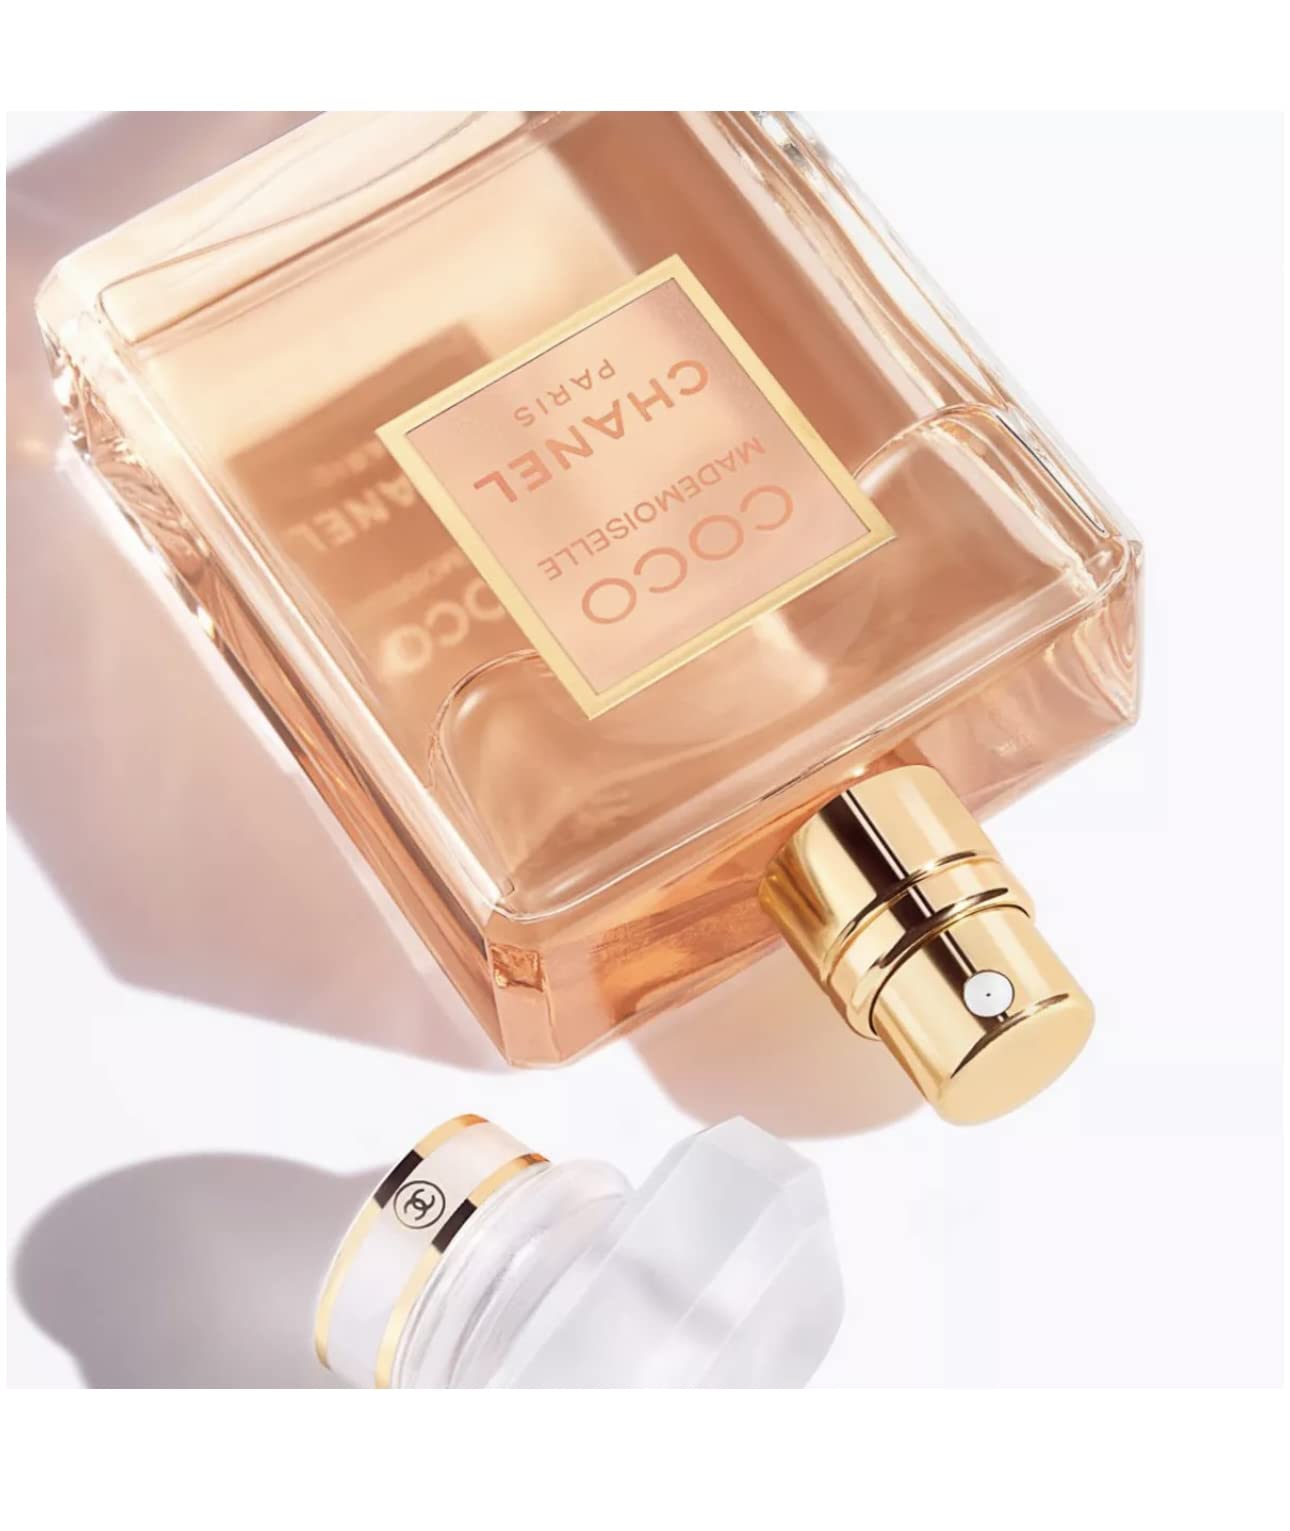 Chanel Coco Mademoiselle Perfume buy to Vietnam CosmoStore Vietnam